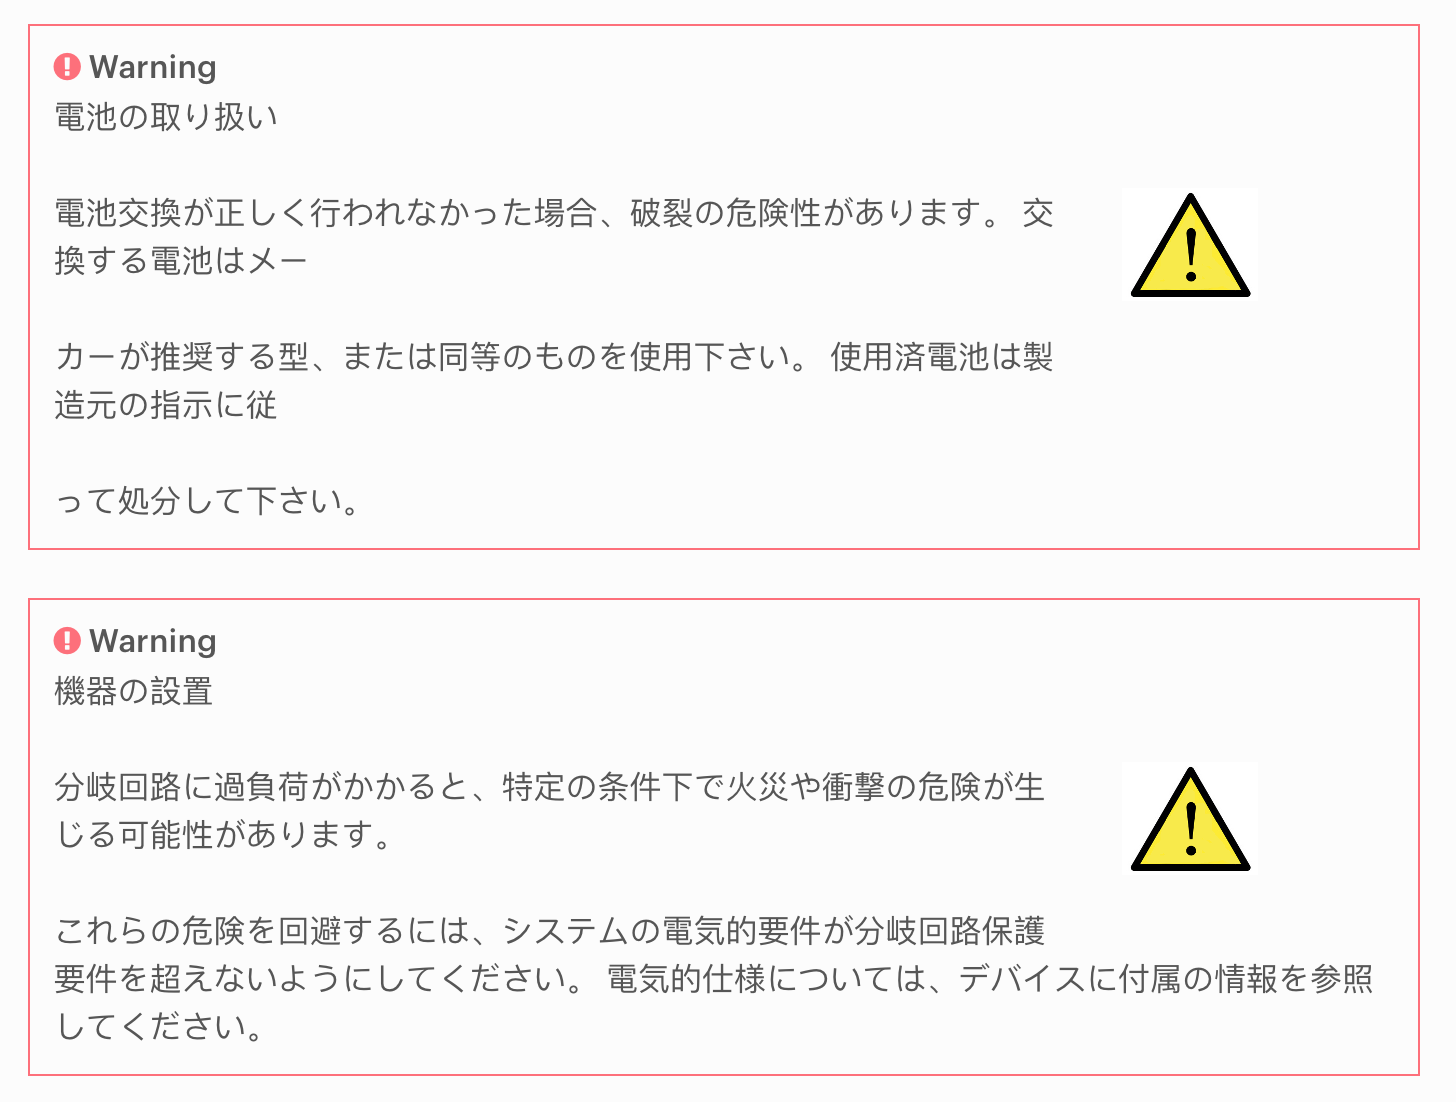 _images/japan-warnings-2.png